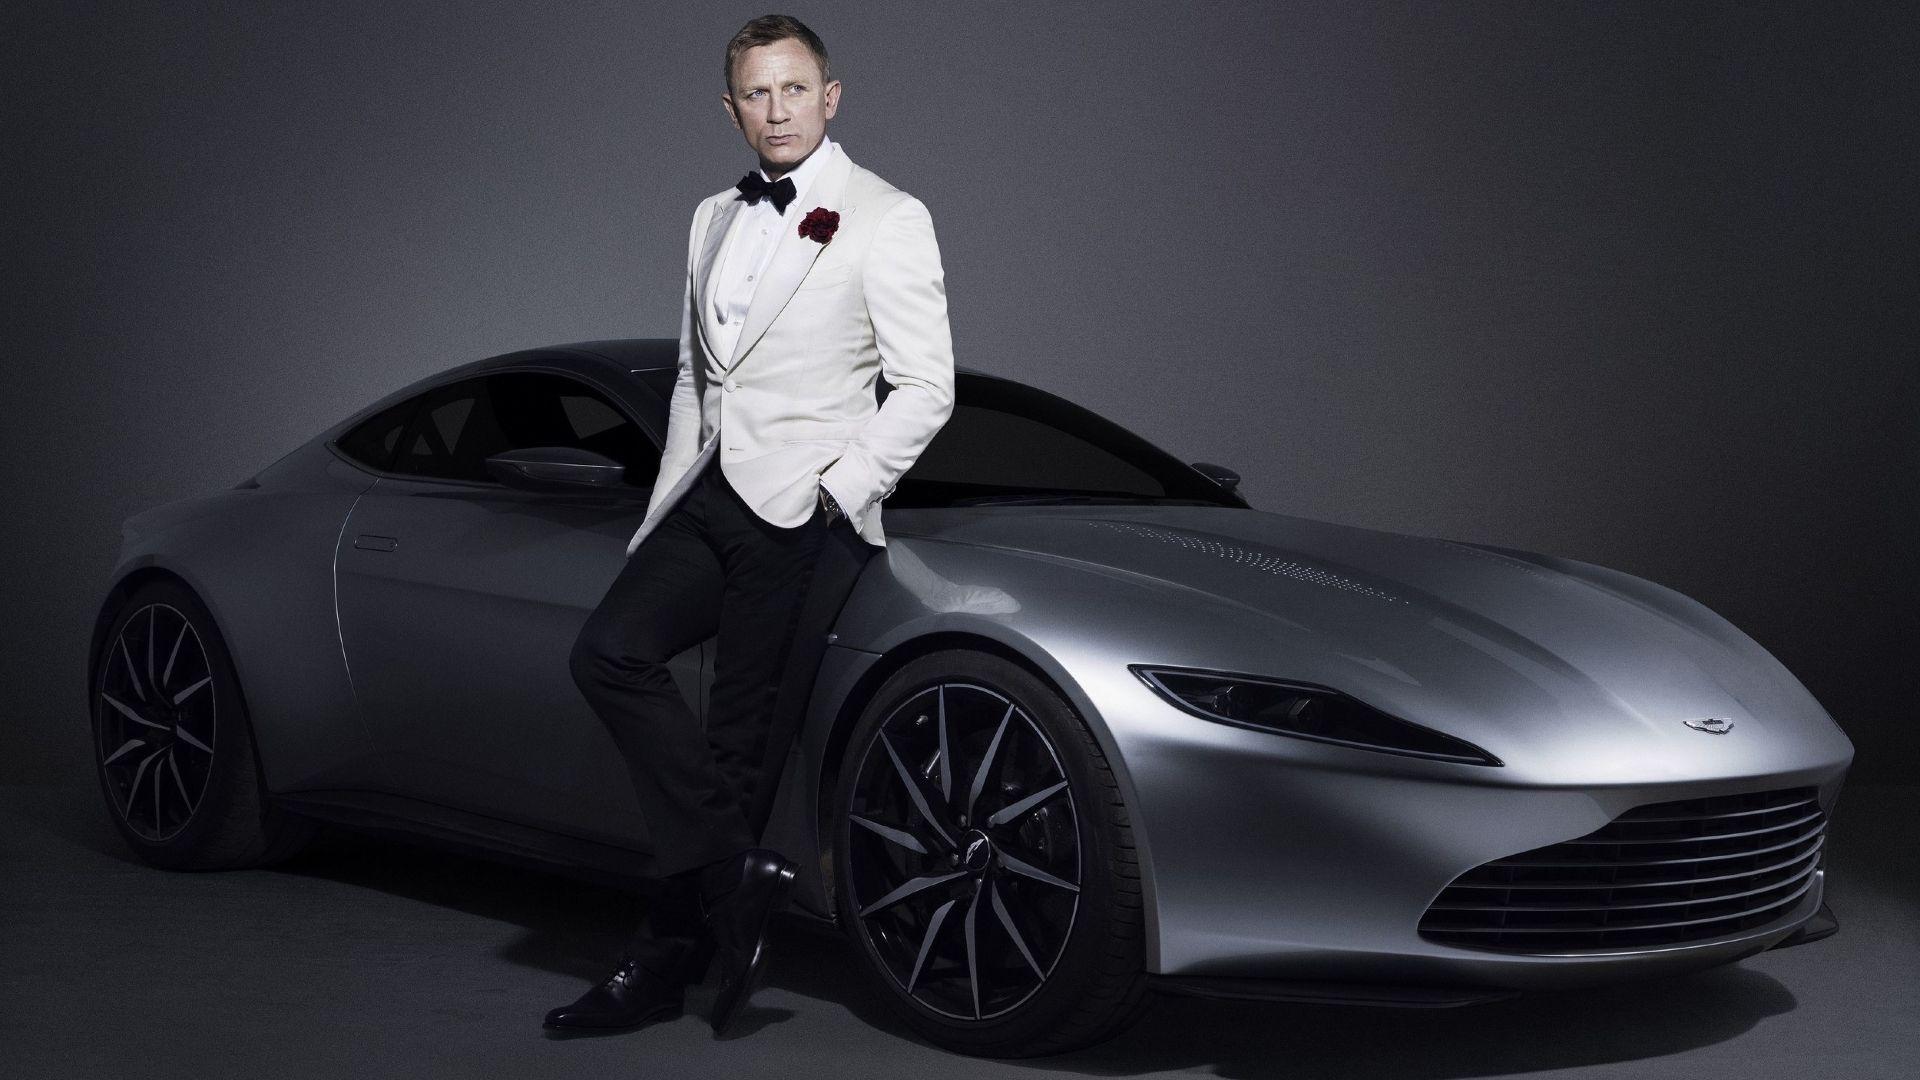 Download Daniel Craig 007 James Bond Aston Martin Car Photohoot